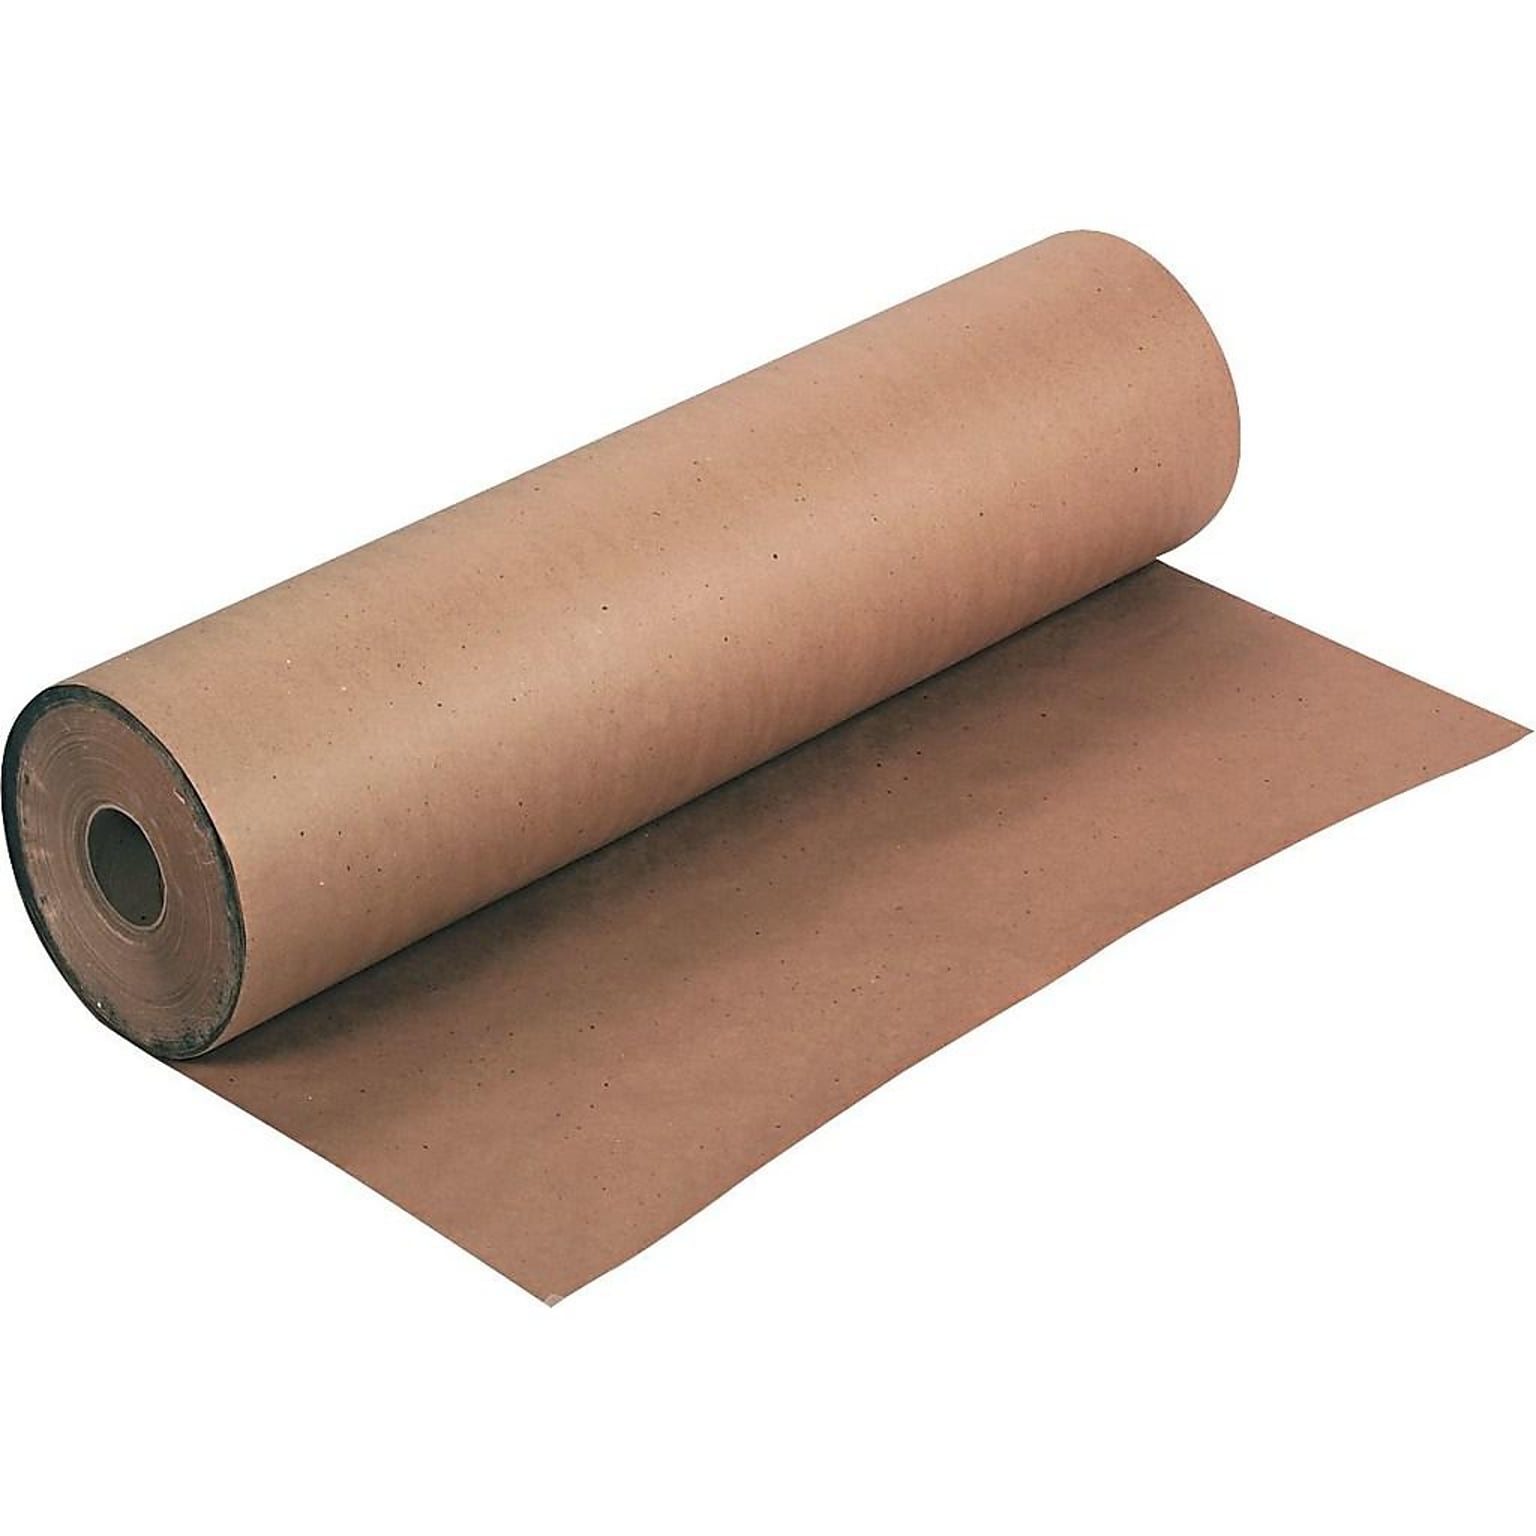 Pacon Paper Roll, 36W x 1000L, Natural Kraft (5836)